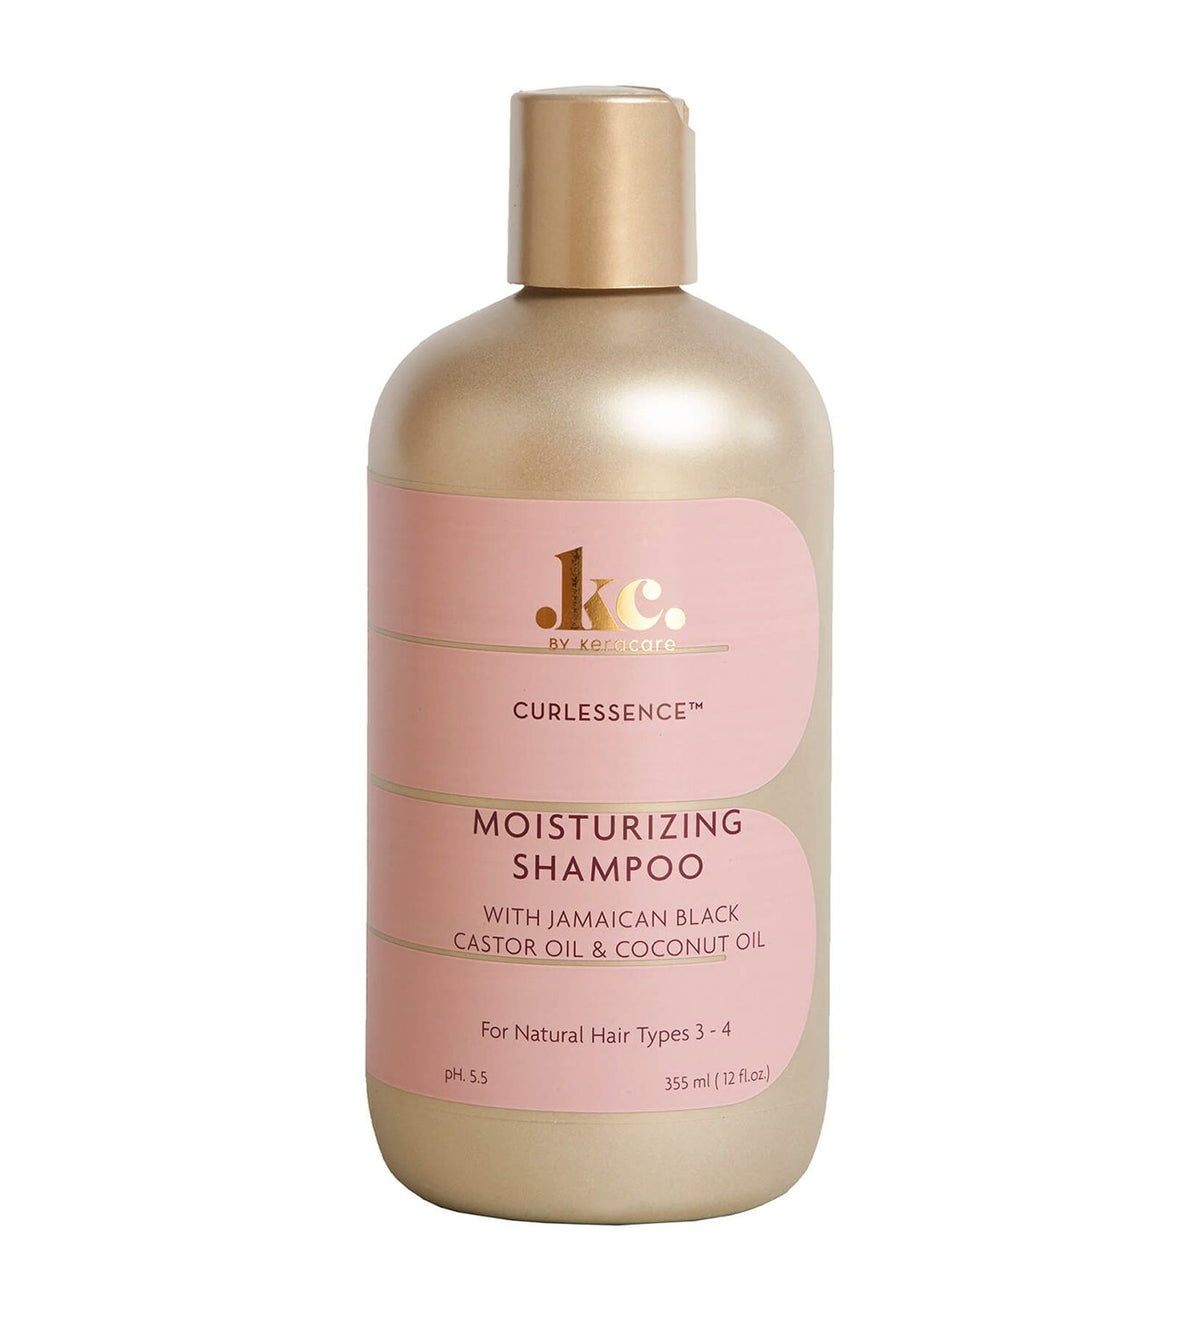 Keracare Curlessence Shampoo 335ml - AQ Online